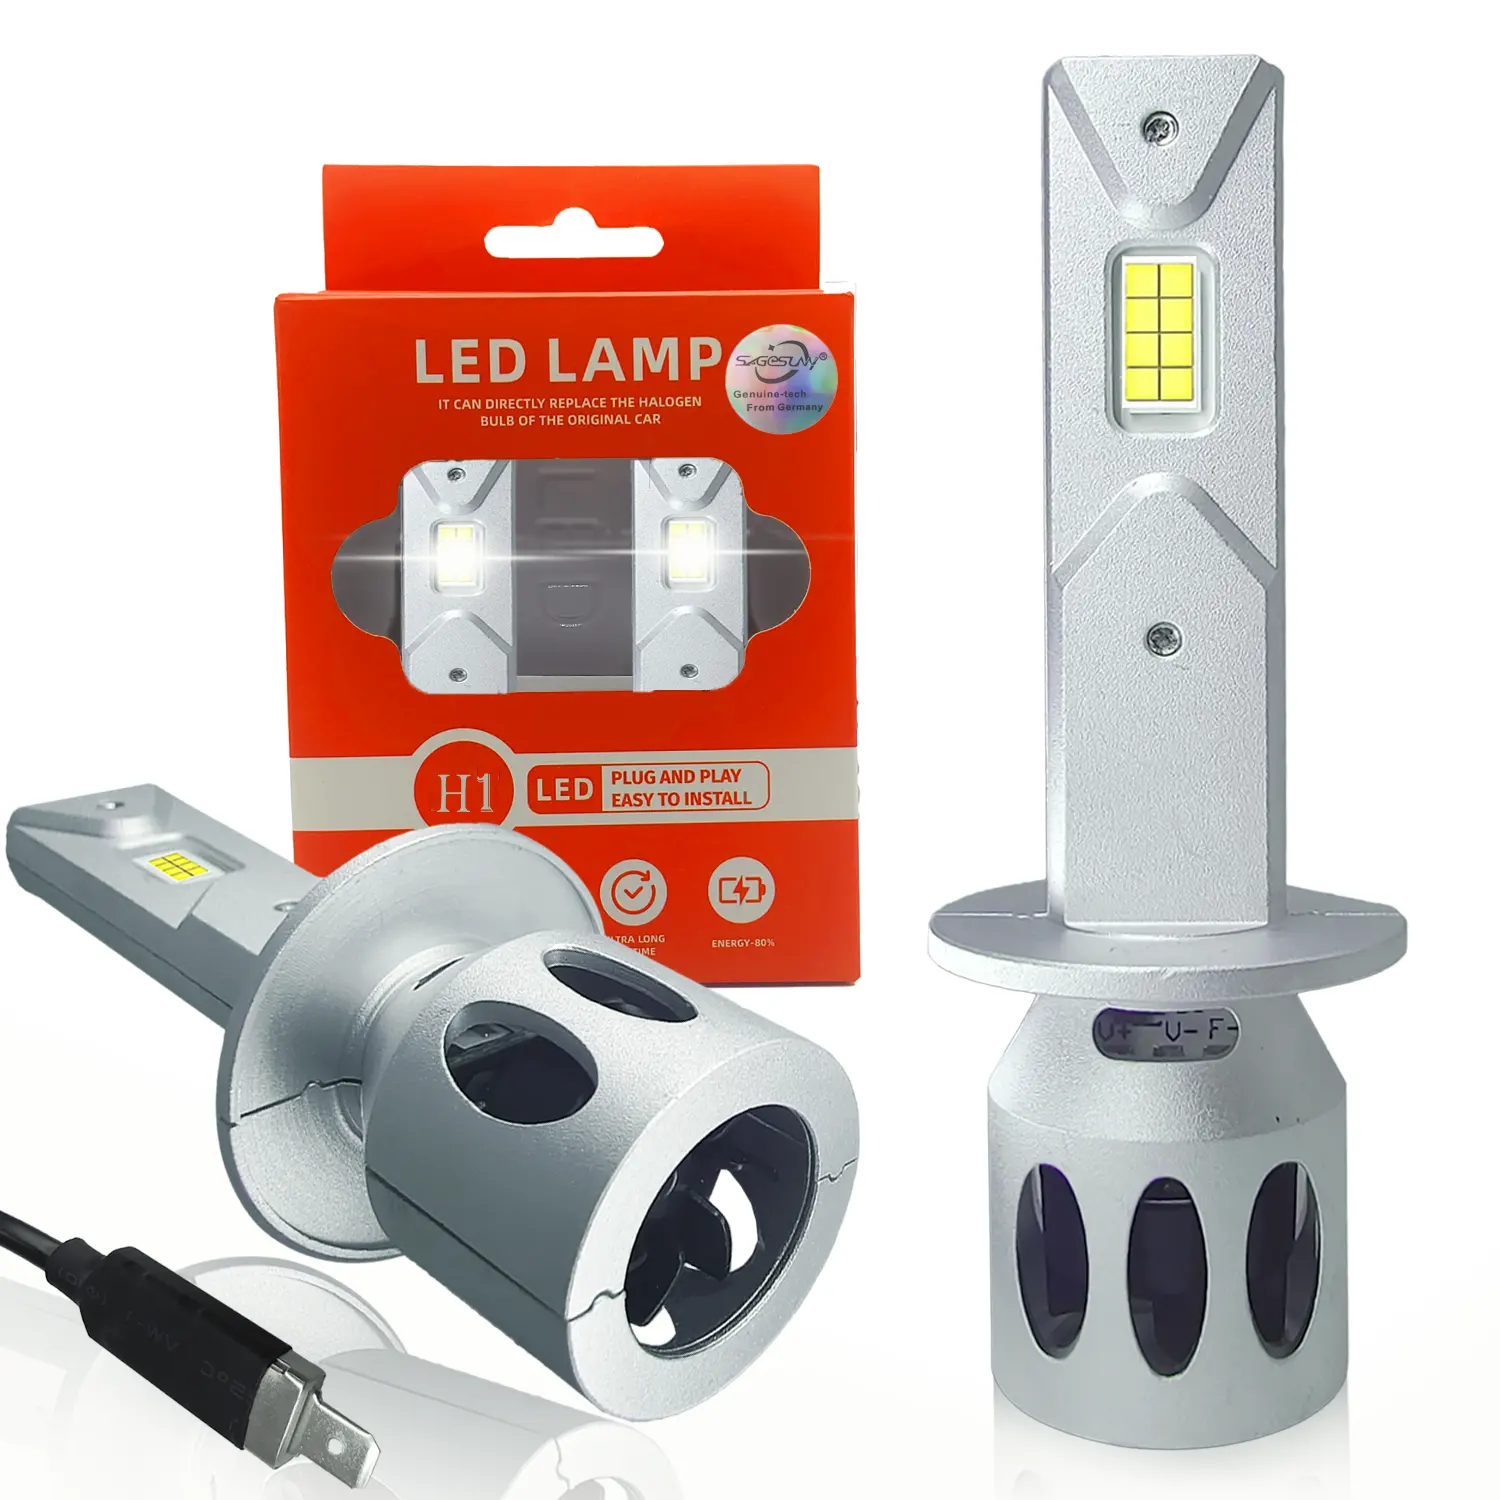 2Pcs H1 LED Light Bulb Headlight 24w Fog Light Mini Size LED fog light Mute Fan For Car CSP Chips 2800lm